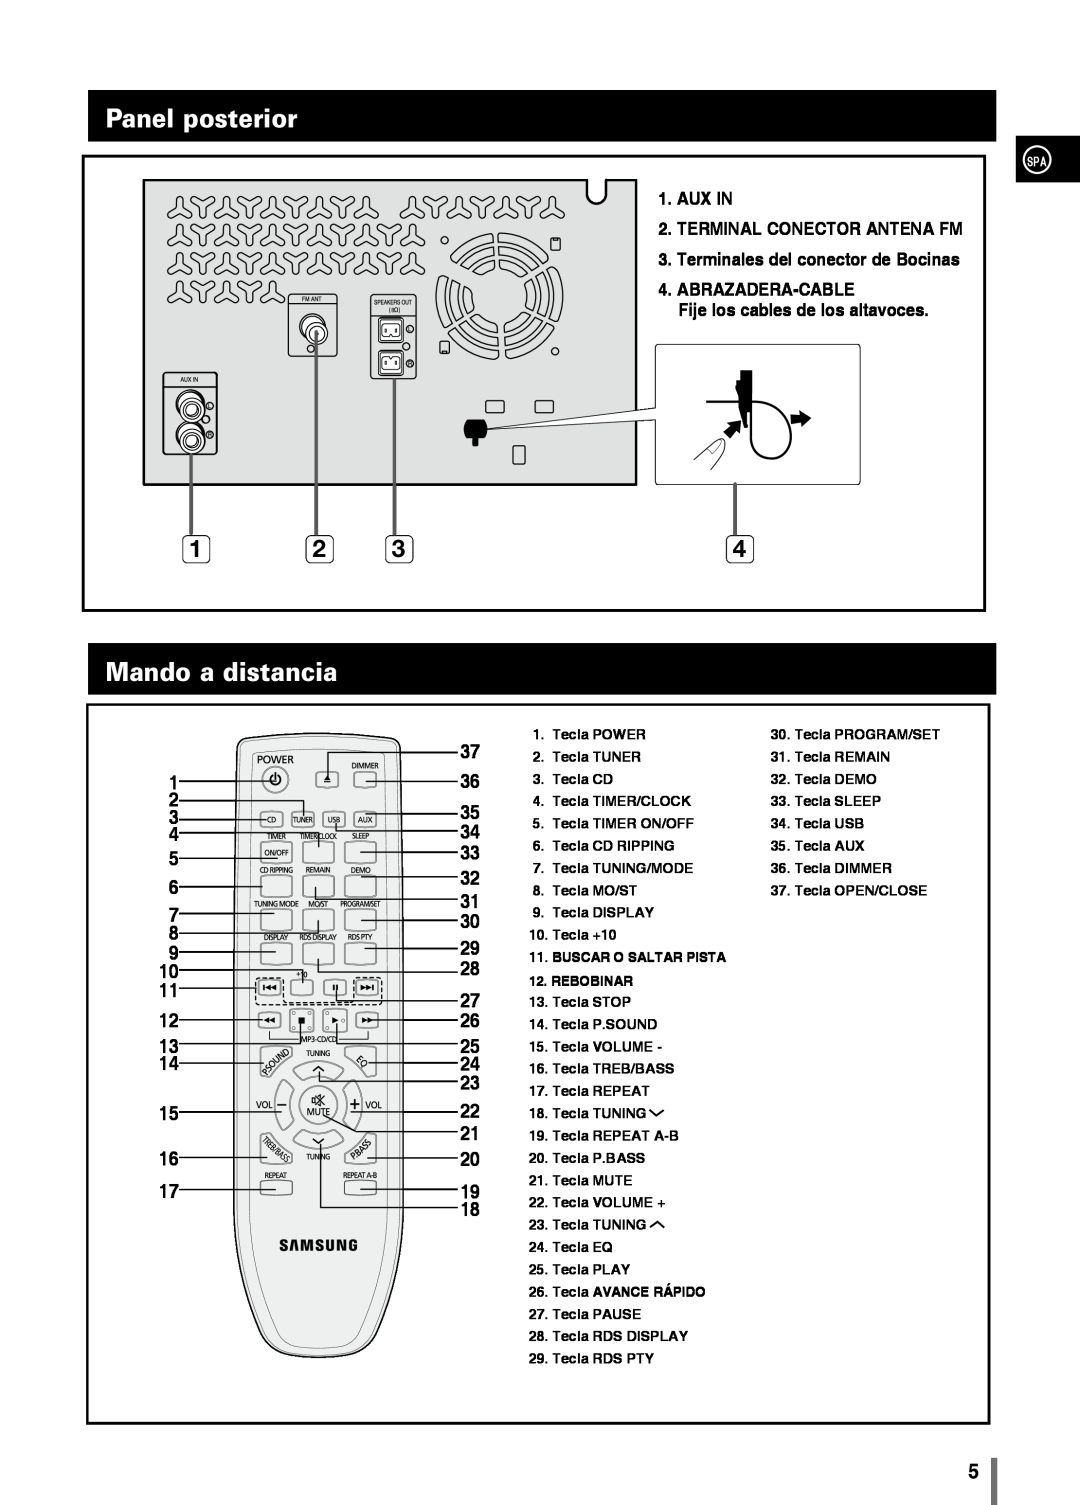 Samsung MM-C330/XEF Panel posterior, Mando a distancia, AUX IN 2. TERMINAL CONECTOR ANTENA FM, Tecla POWER, Tecla TUNER 